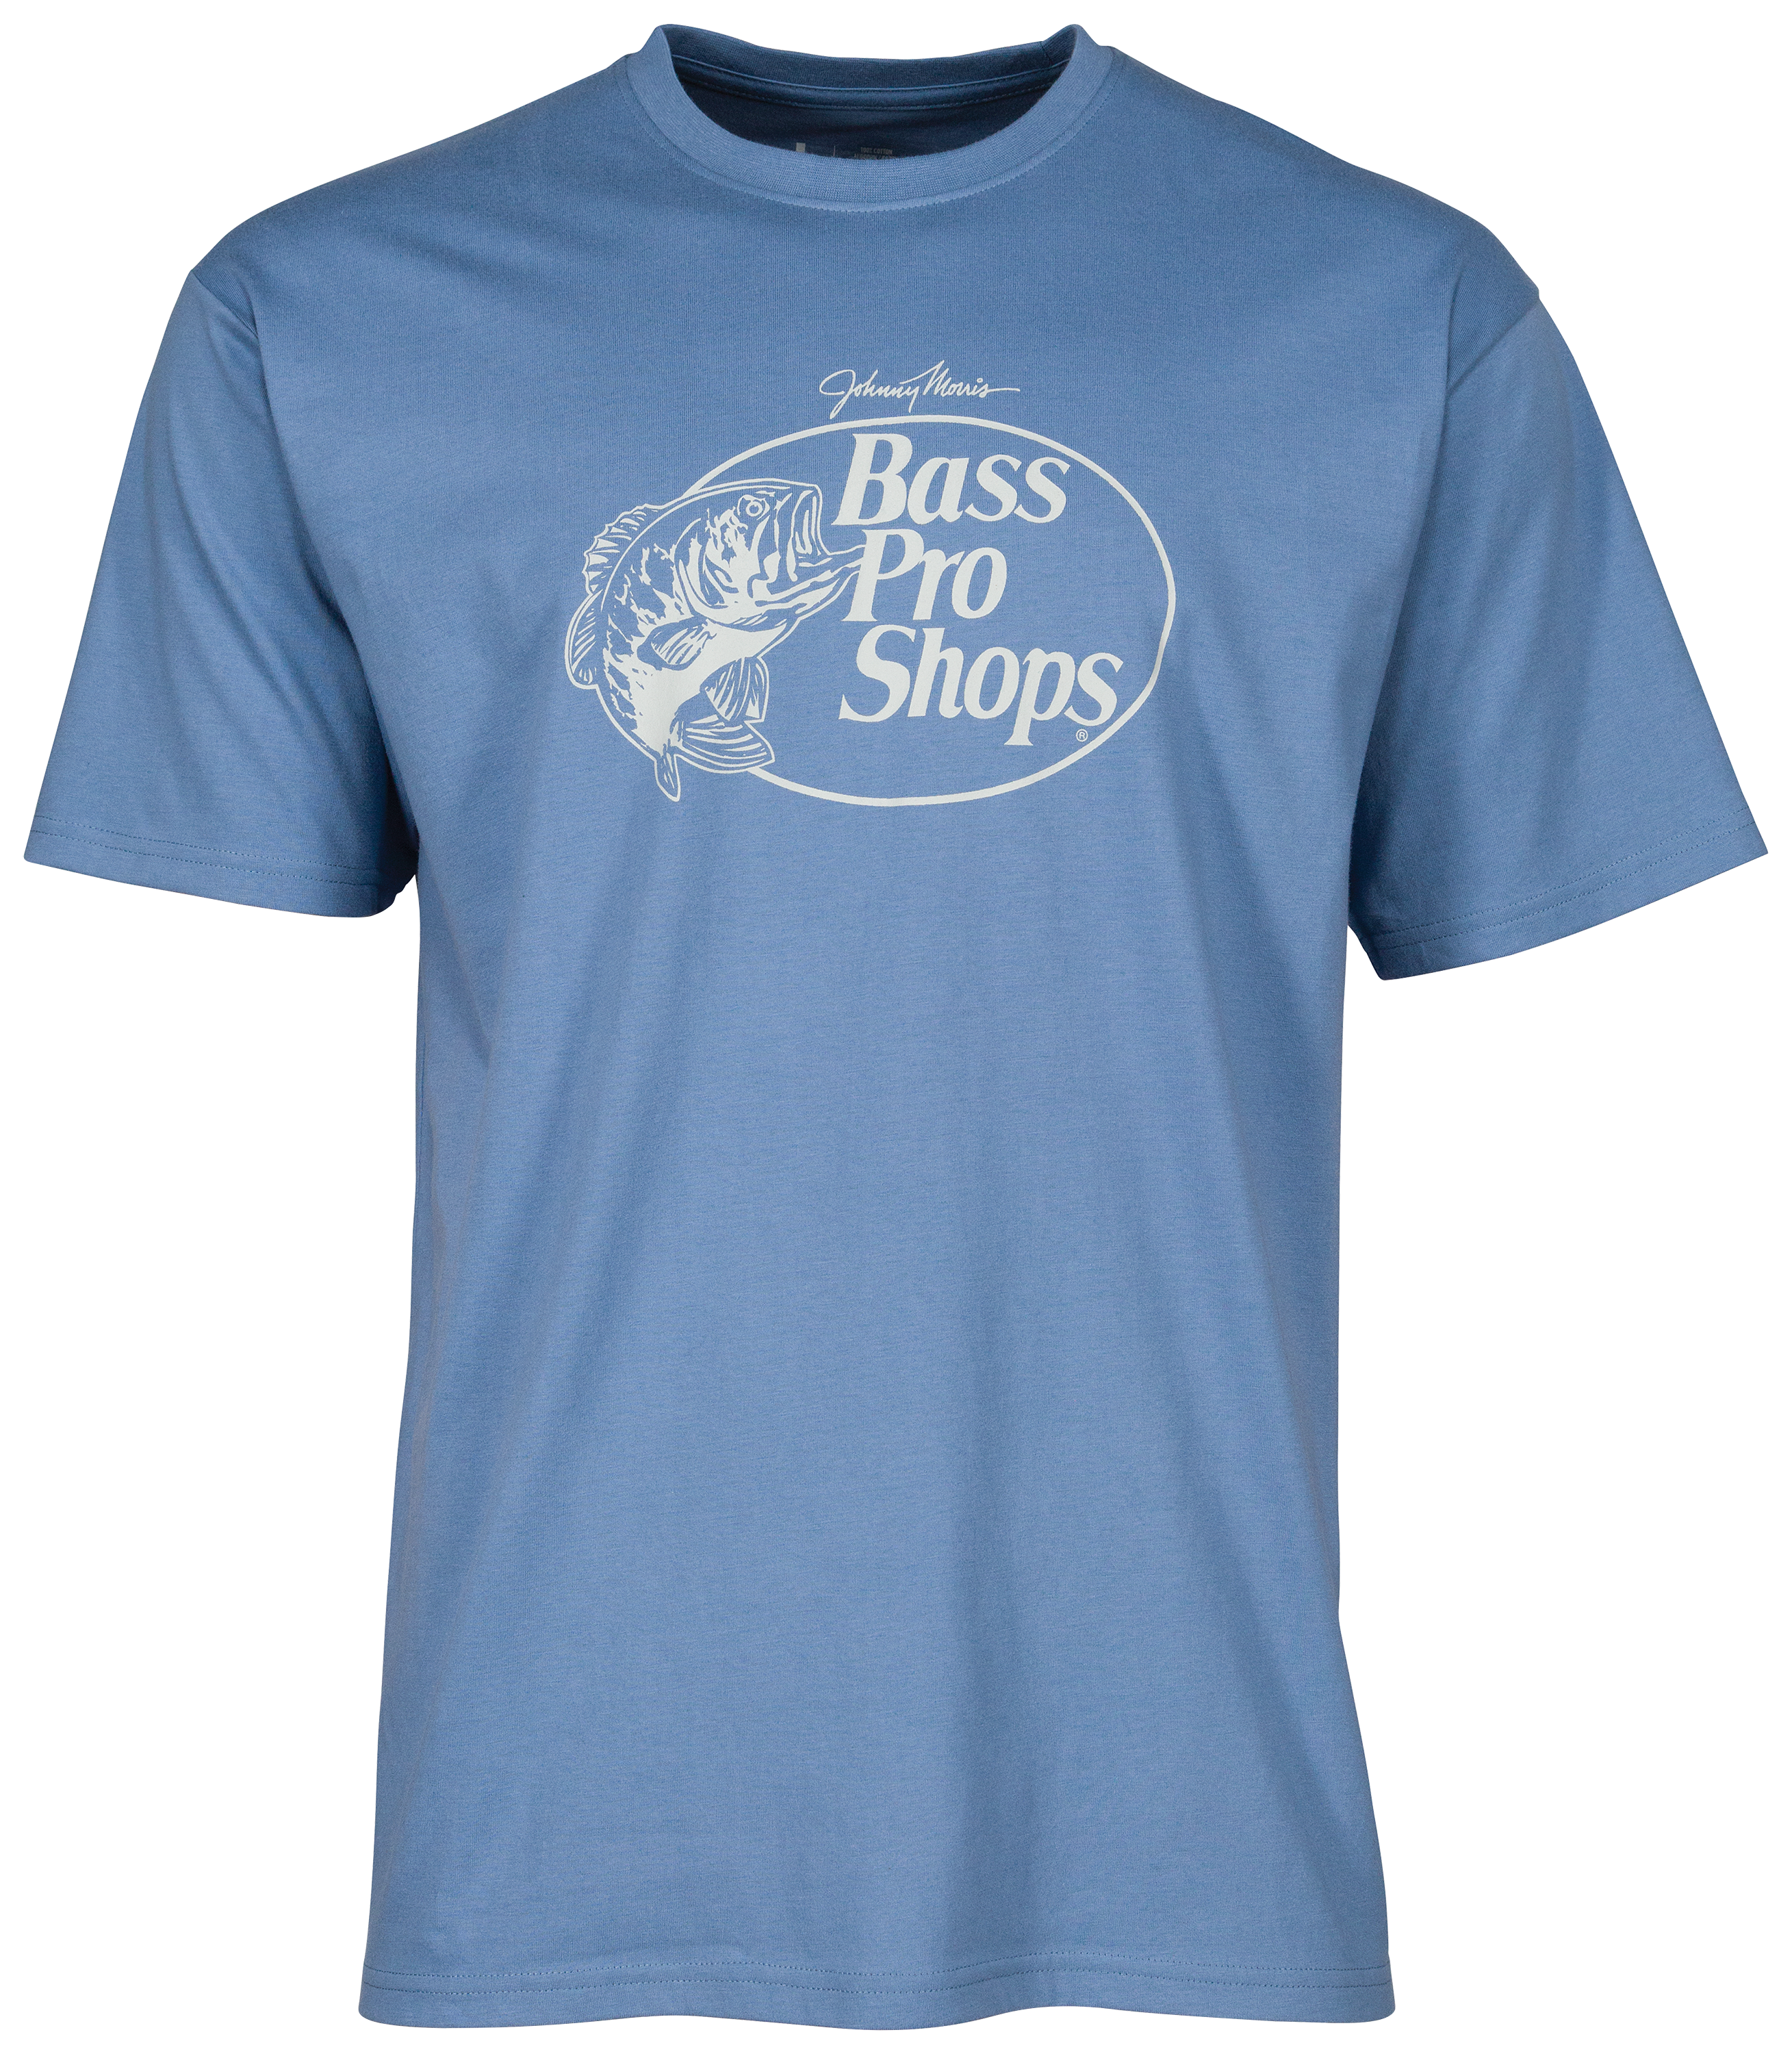 Bass Pro Shops Original Logo 2.0 Short-Sleeve T-Shirt for Men - Infinity - M